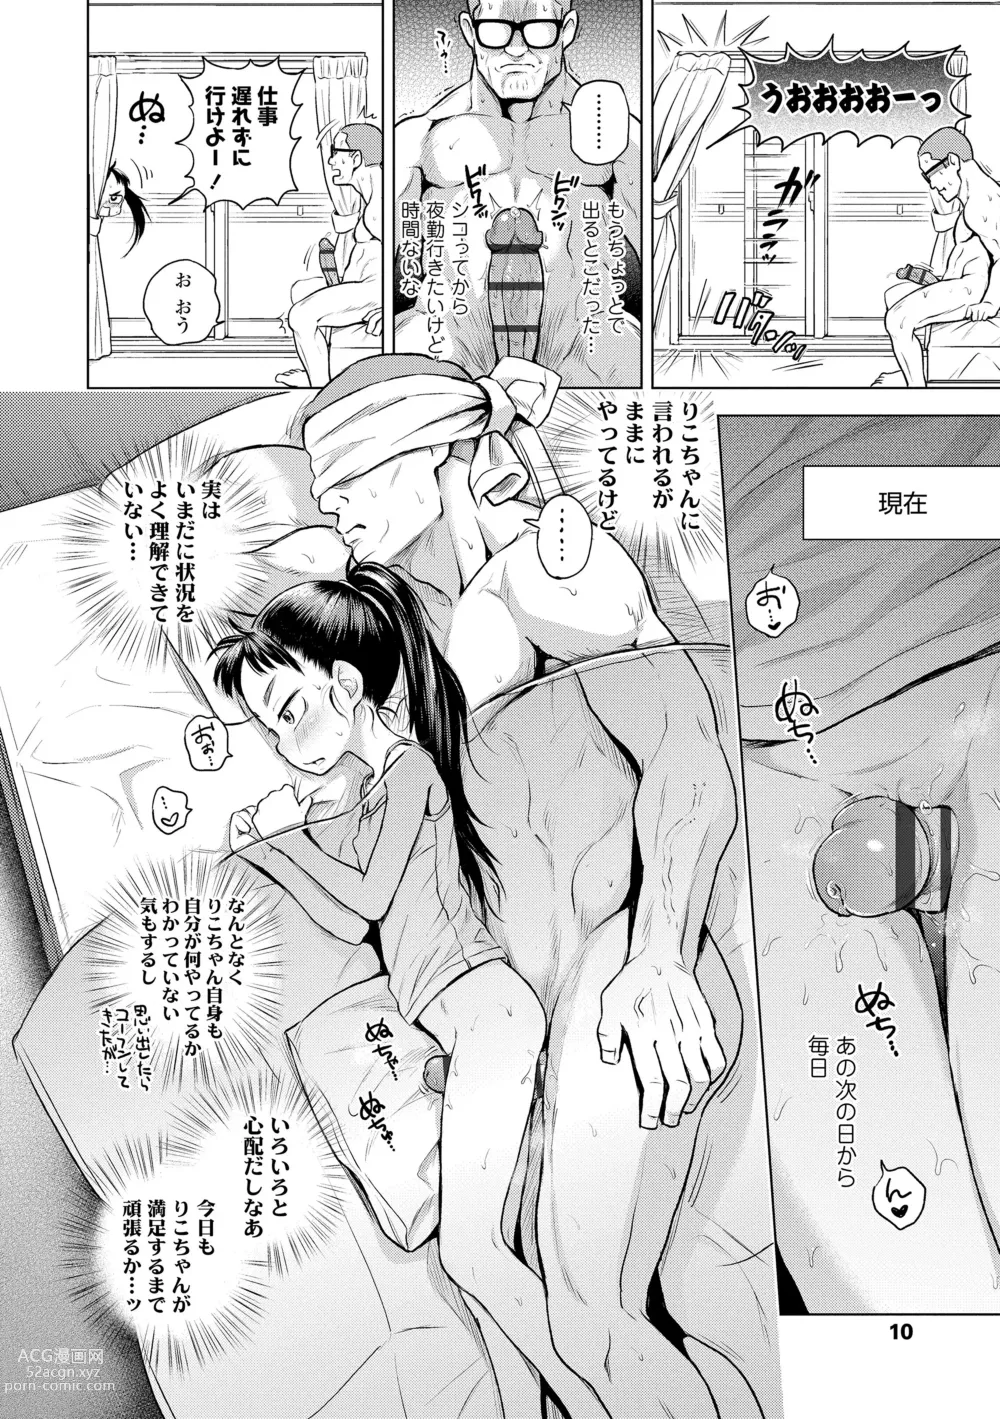 Page 10 of manga Puchi Love Kingdom